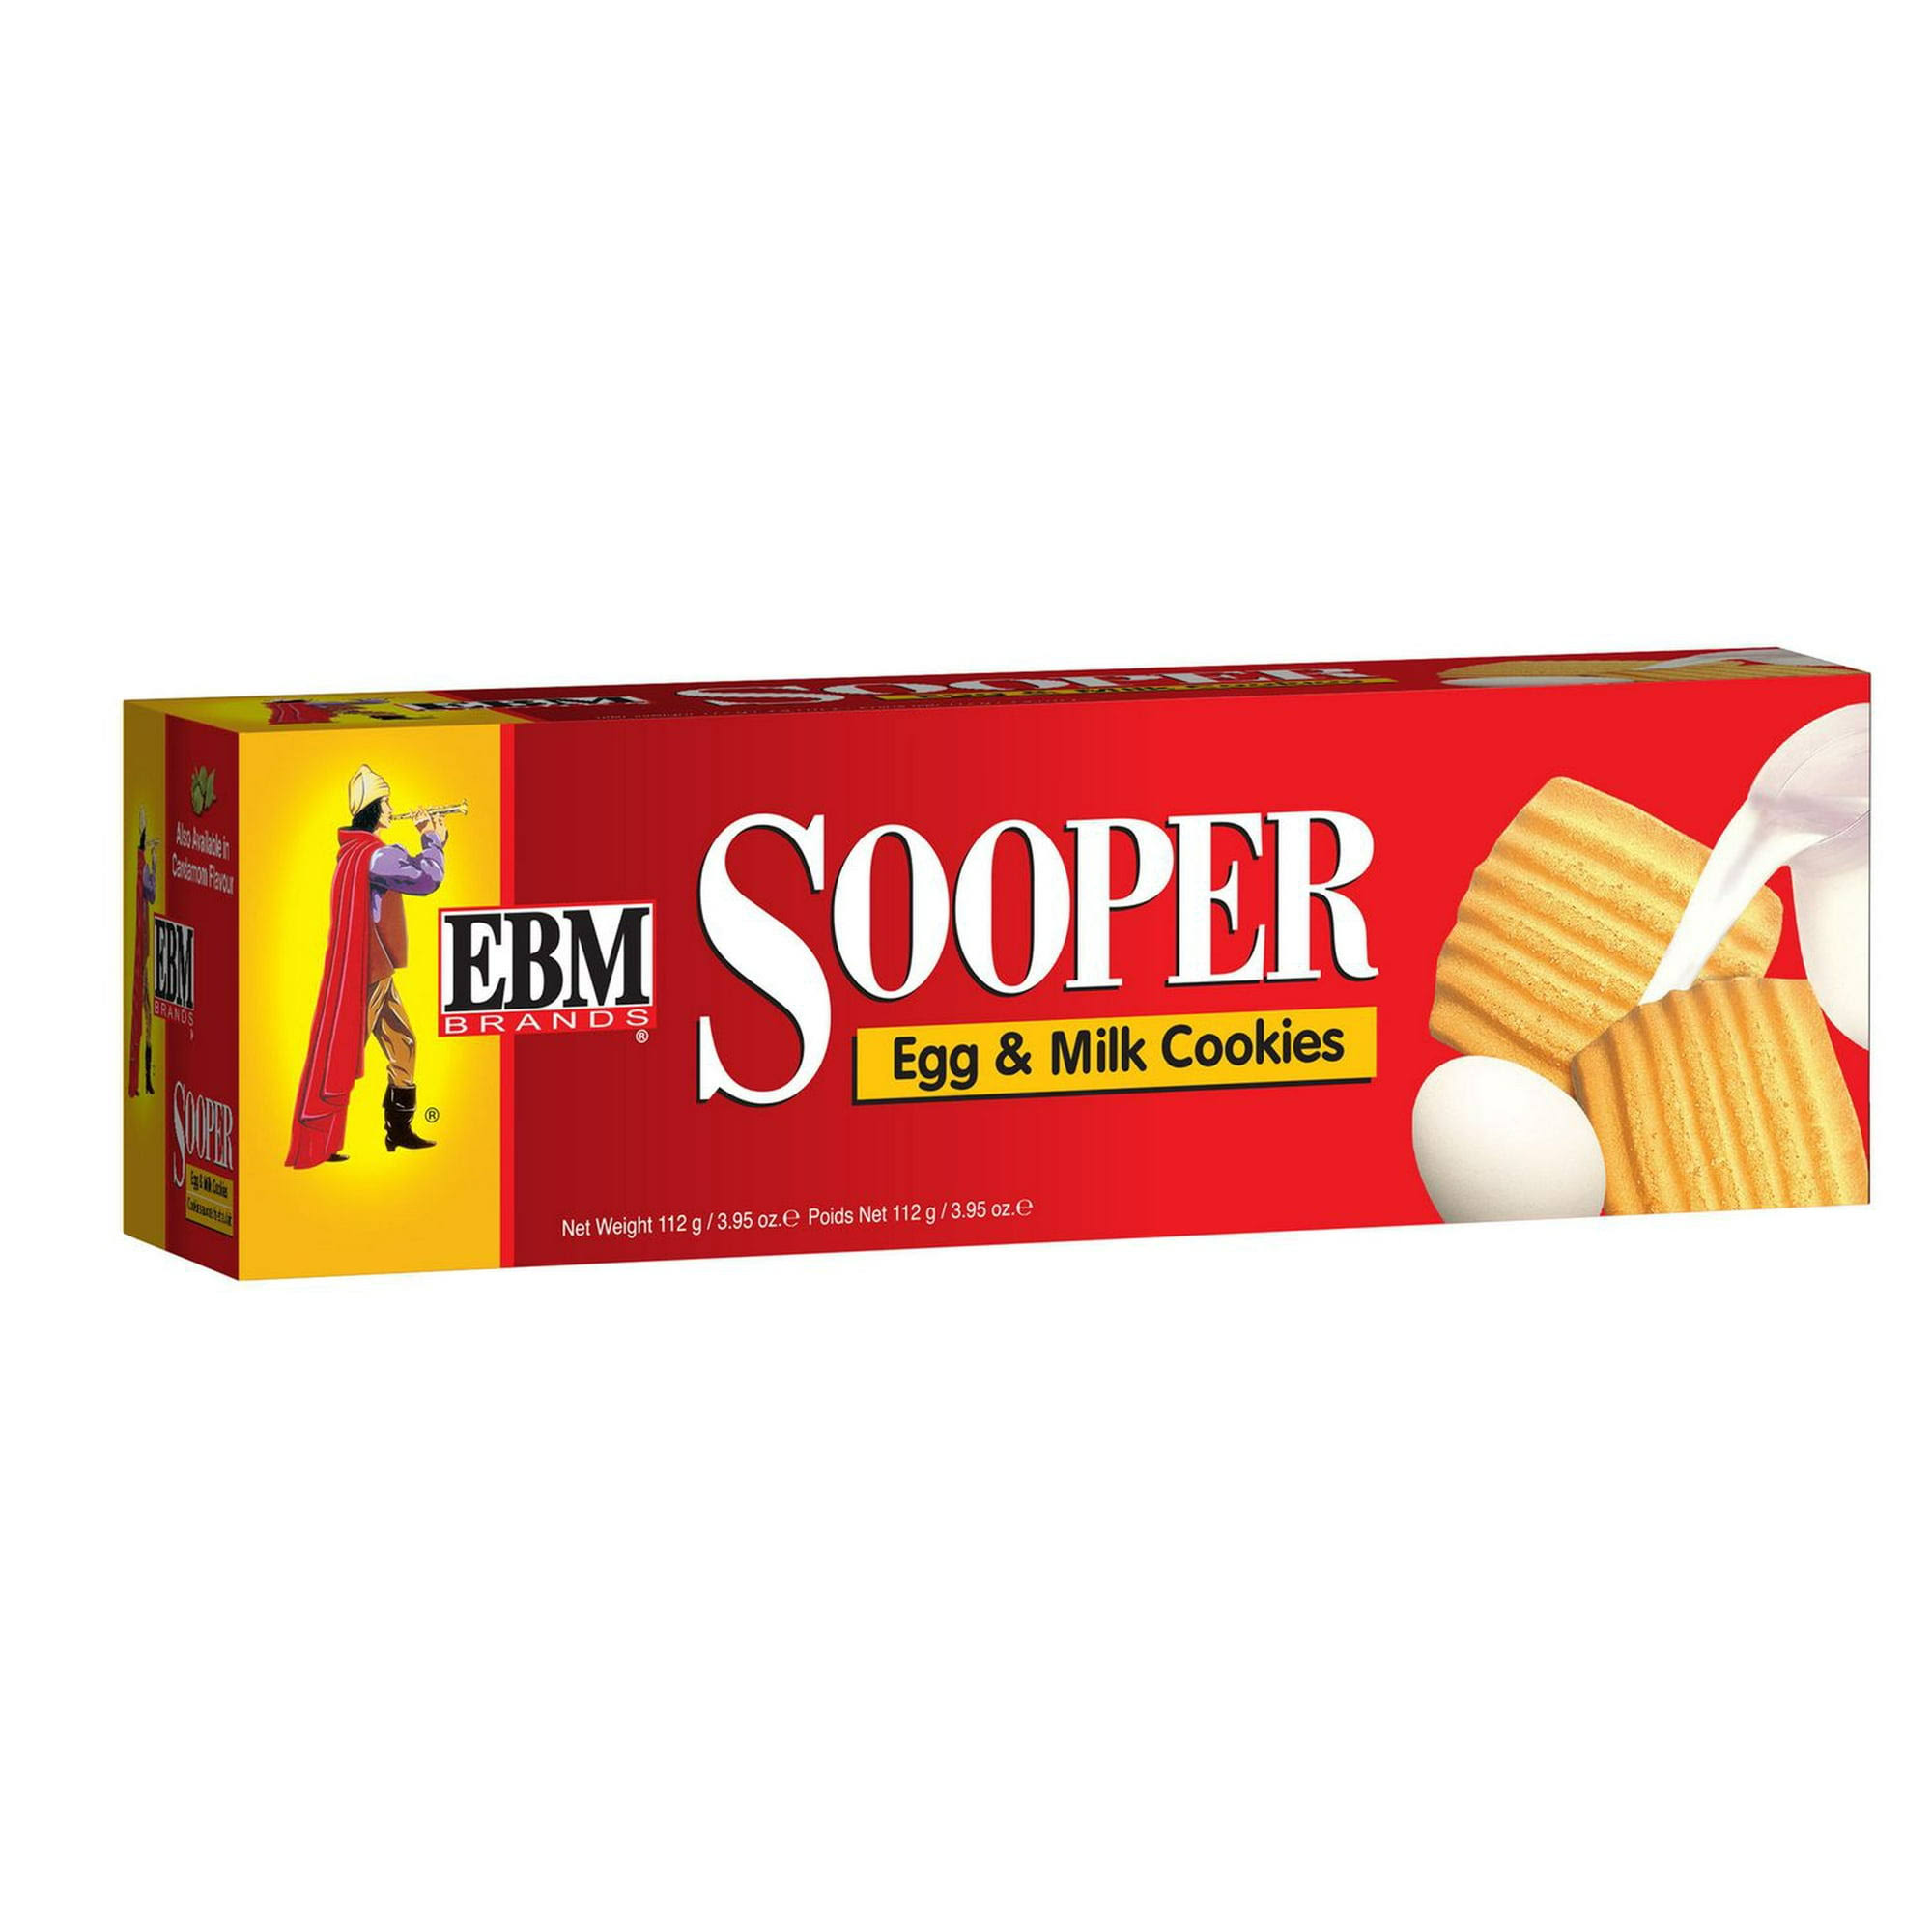 EBM Sooper Egg & Milk Cookies - 112g